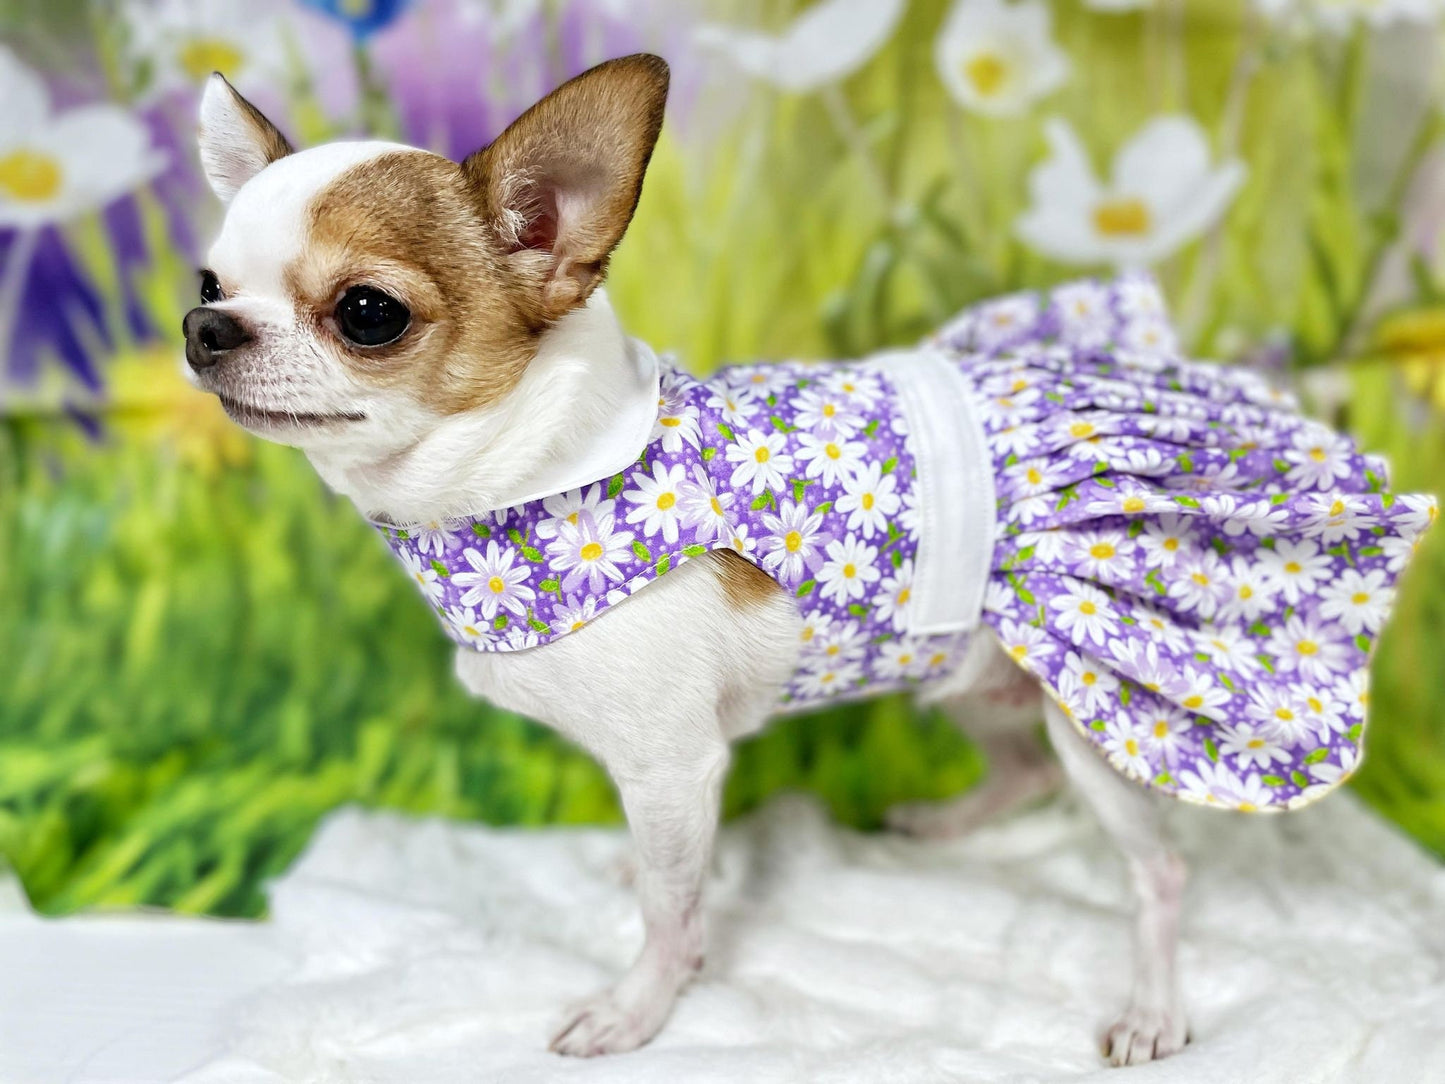 Dog Cat Pet Cotton Dress Harness Purple Daisy Easter